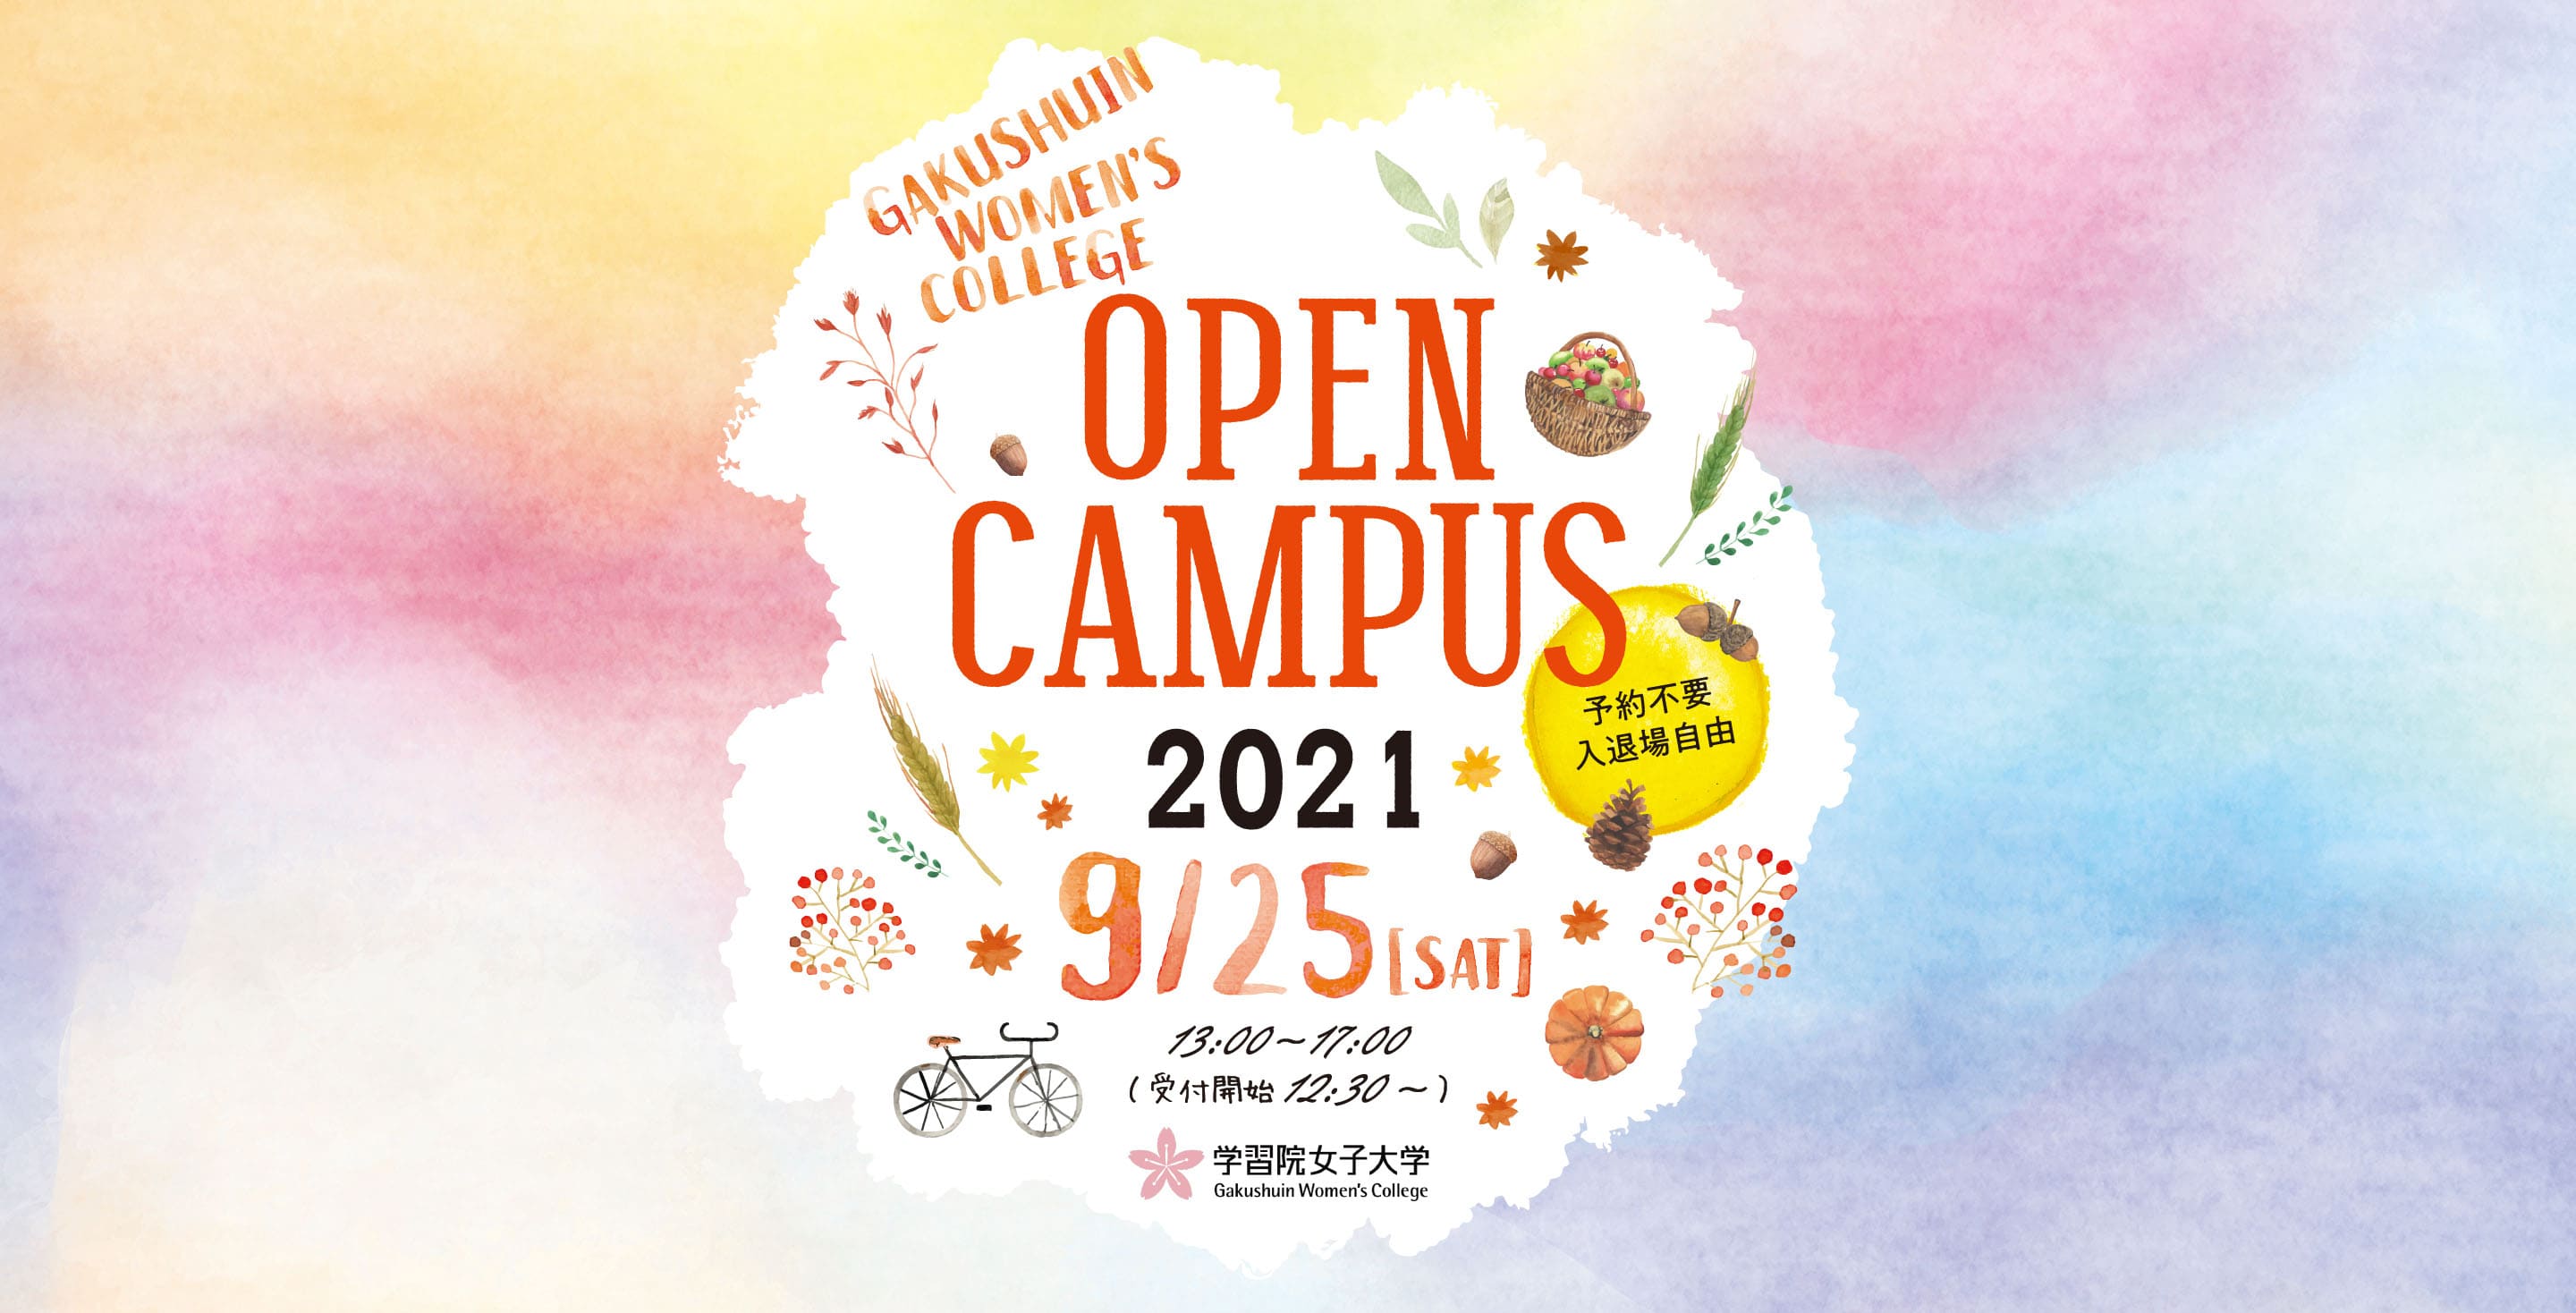 OPEN CAMPUS 2021 9/25(SAT) 学習院女子大学